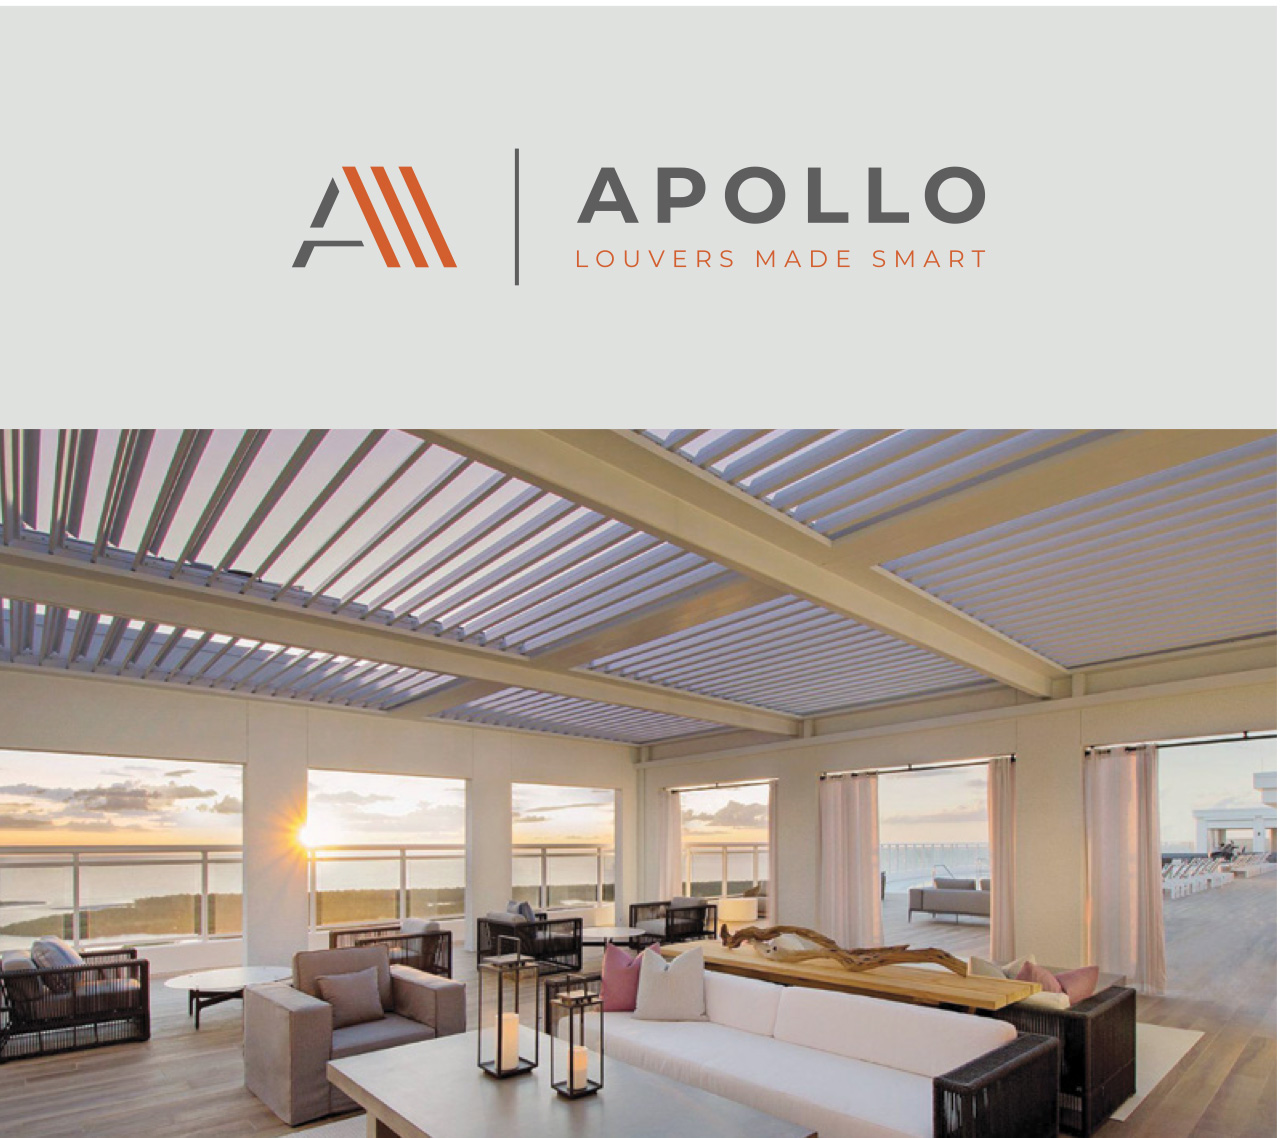 Apollo adjustable patio cover system